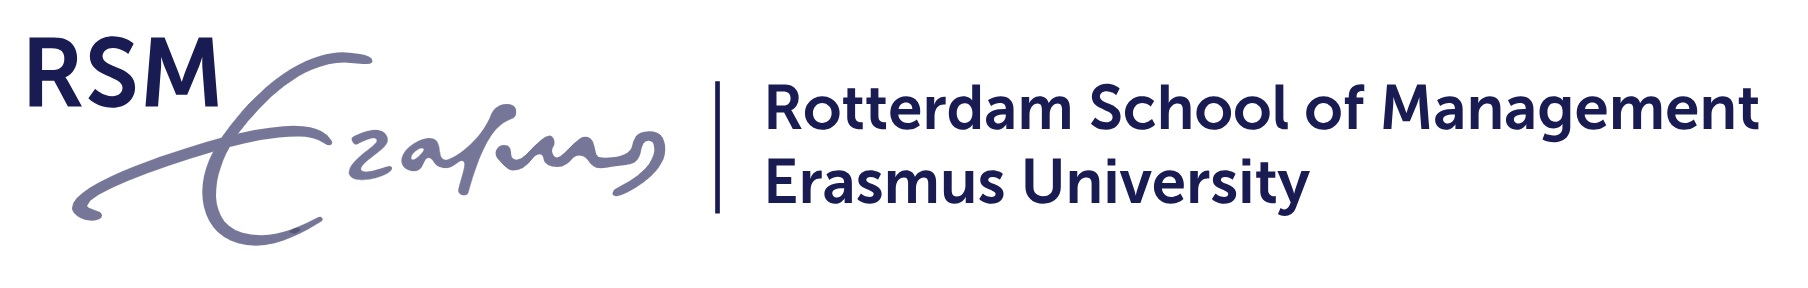 School-Logo-Rotterdam-School-of-Management-RSM-at-Erasmus-University